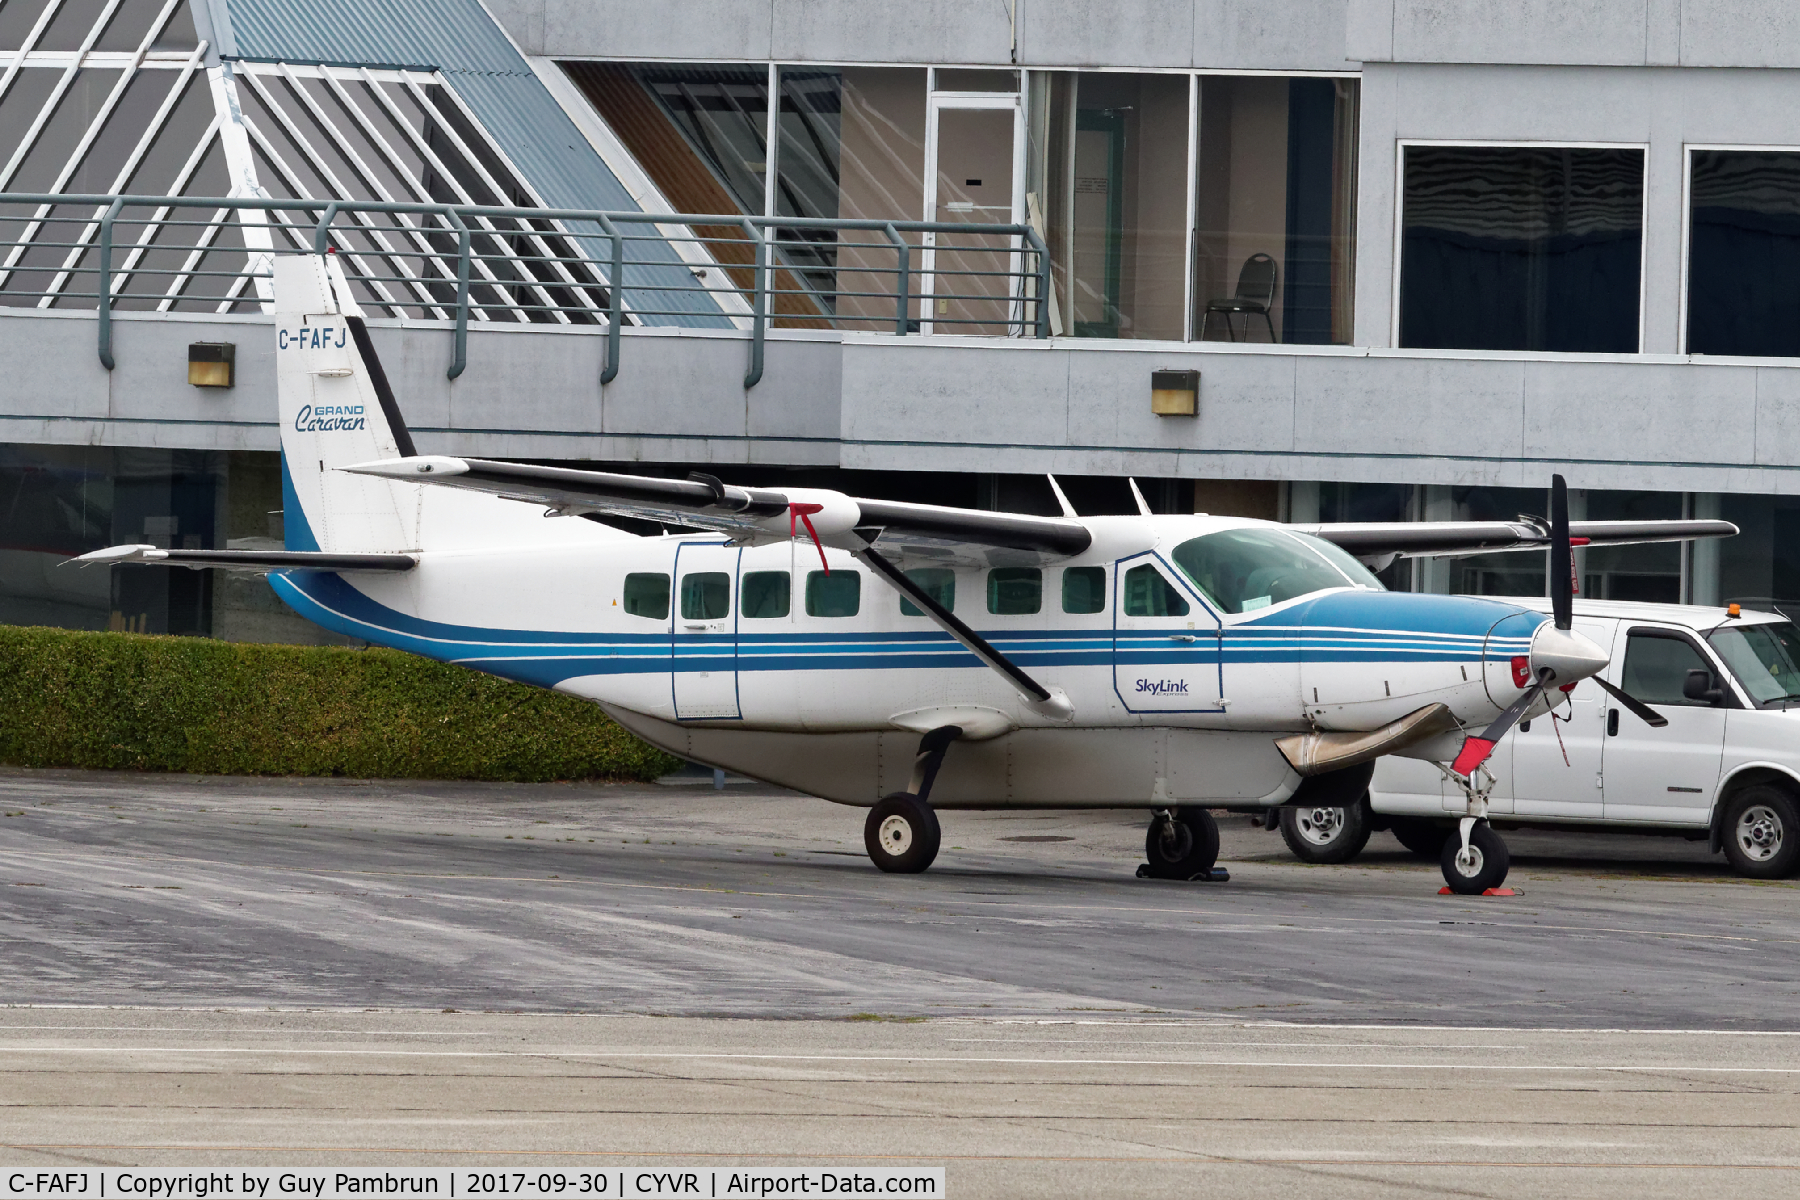 C-FAFJ, 1997 Cessna 208B Caravan I C/N 208B0641, Parked